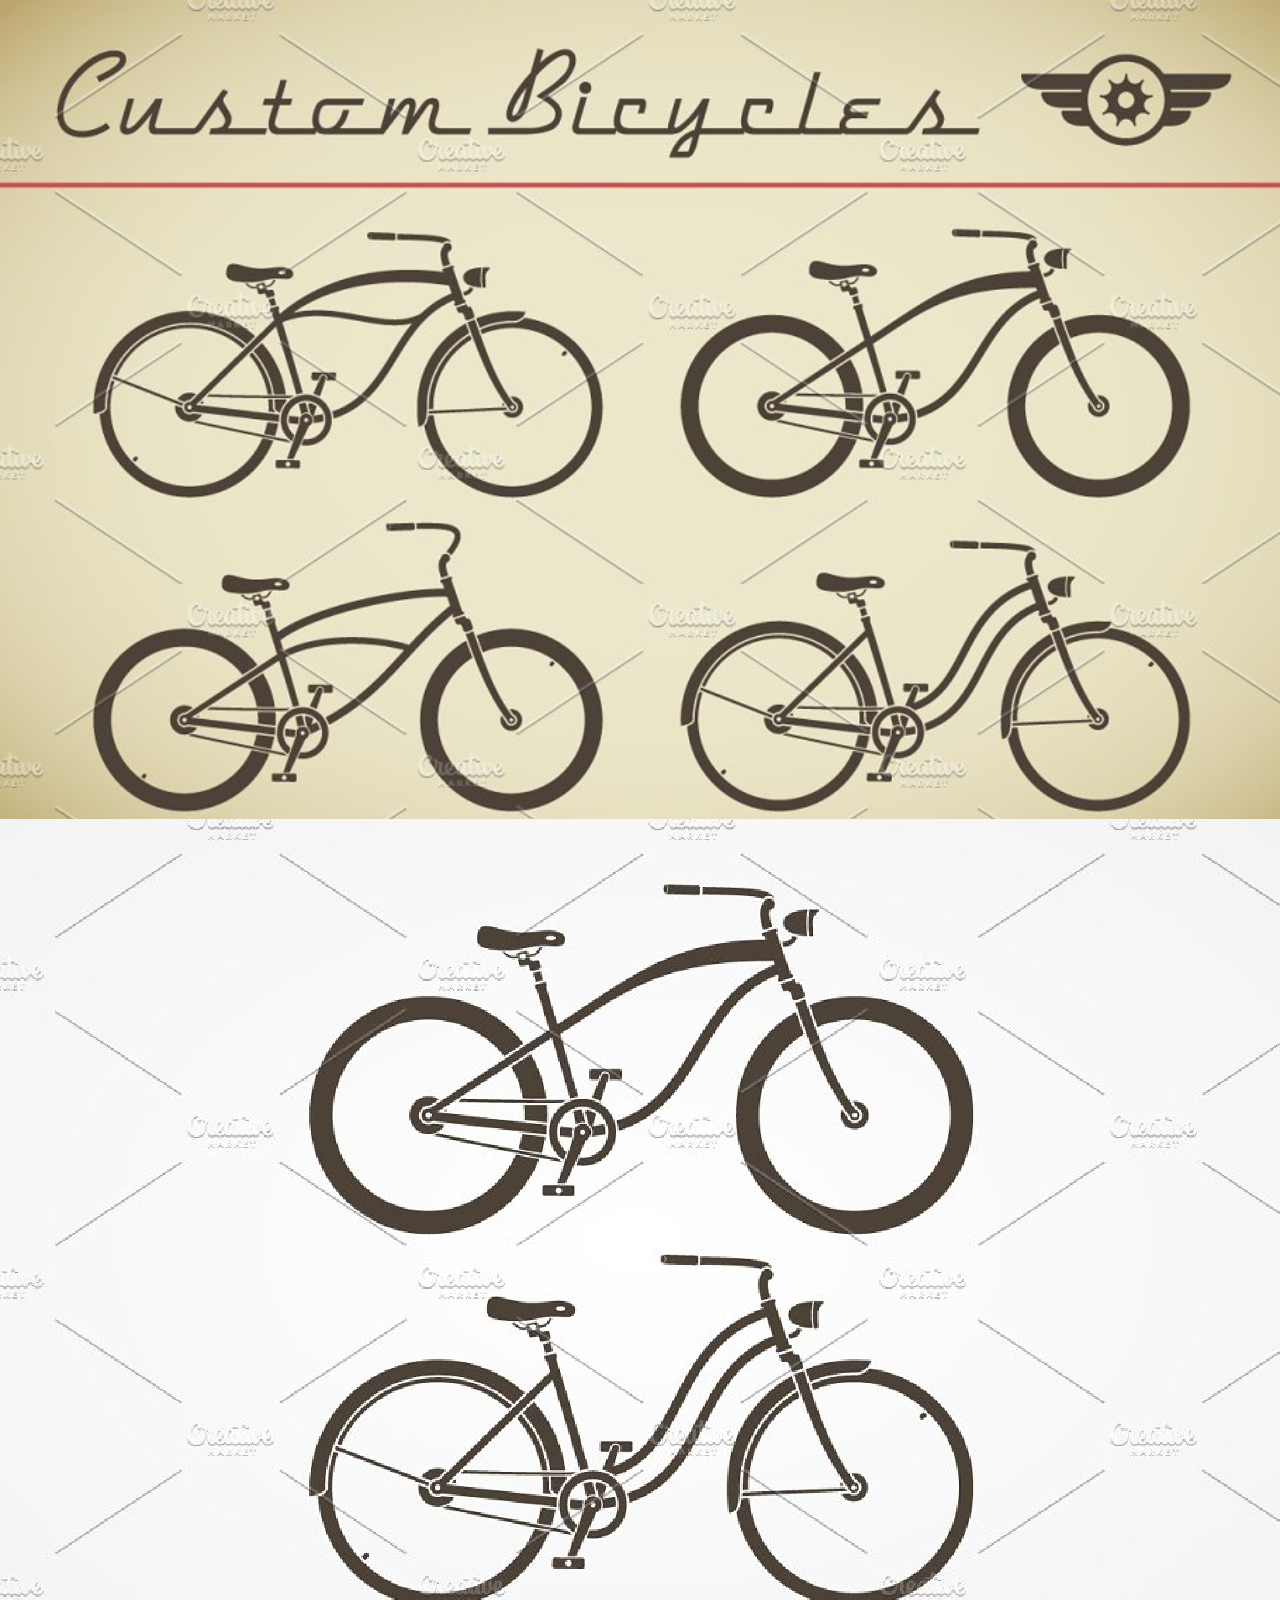 Custom criuser bicycle set pinterest image preview.